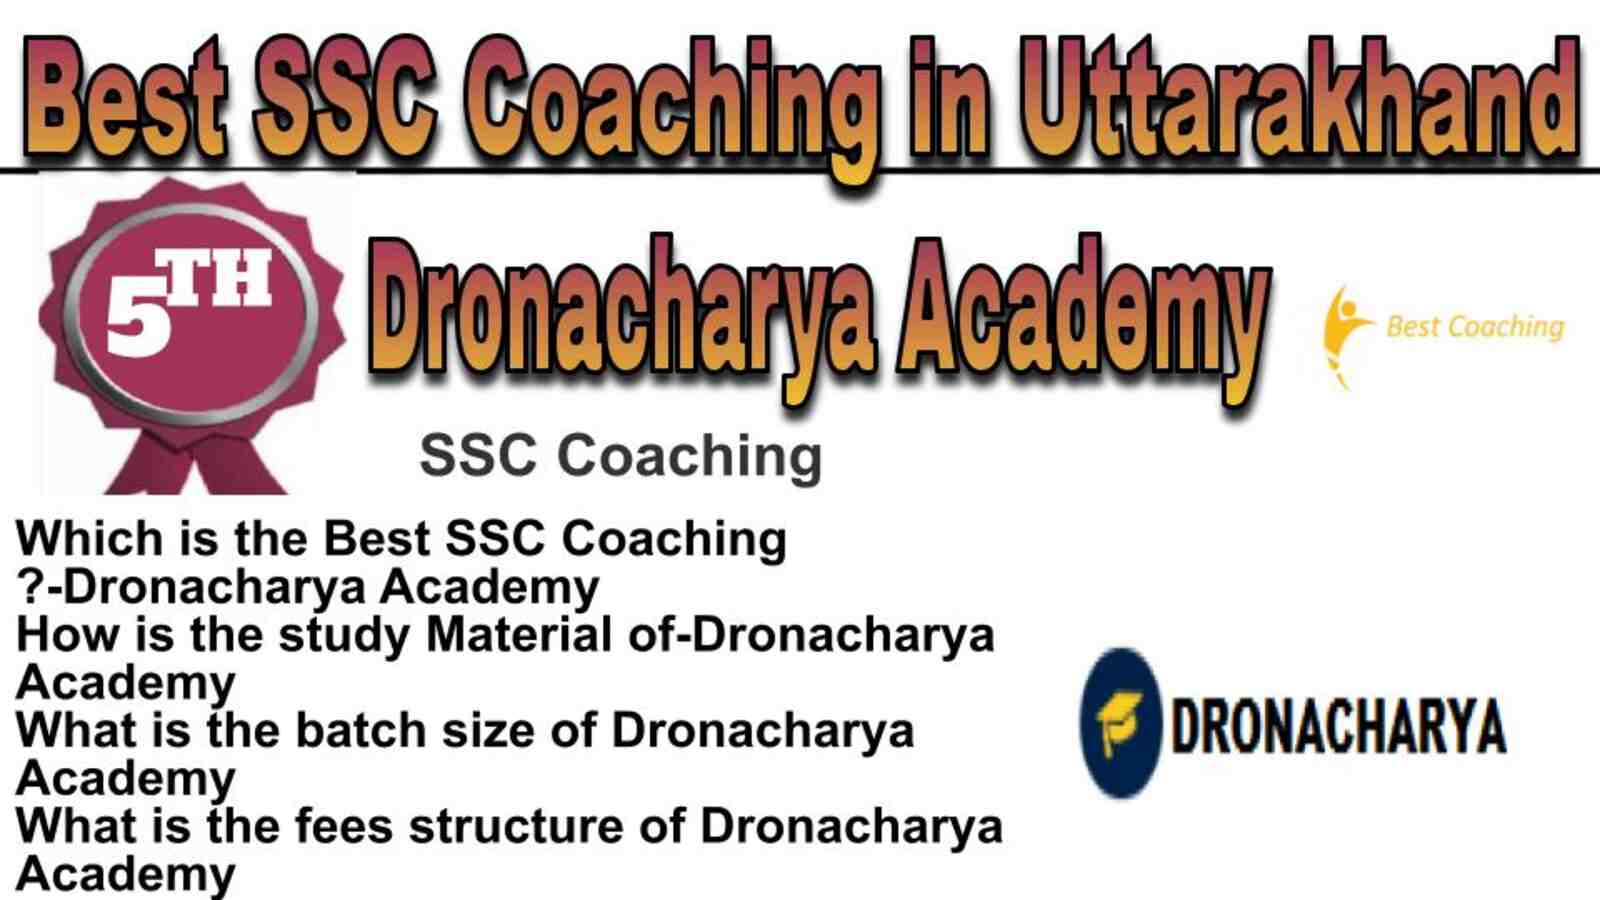 Rank 5 best SSC coaching in Uttarakhand